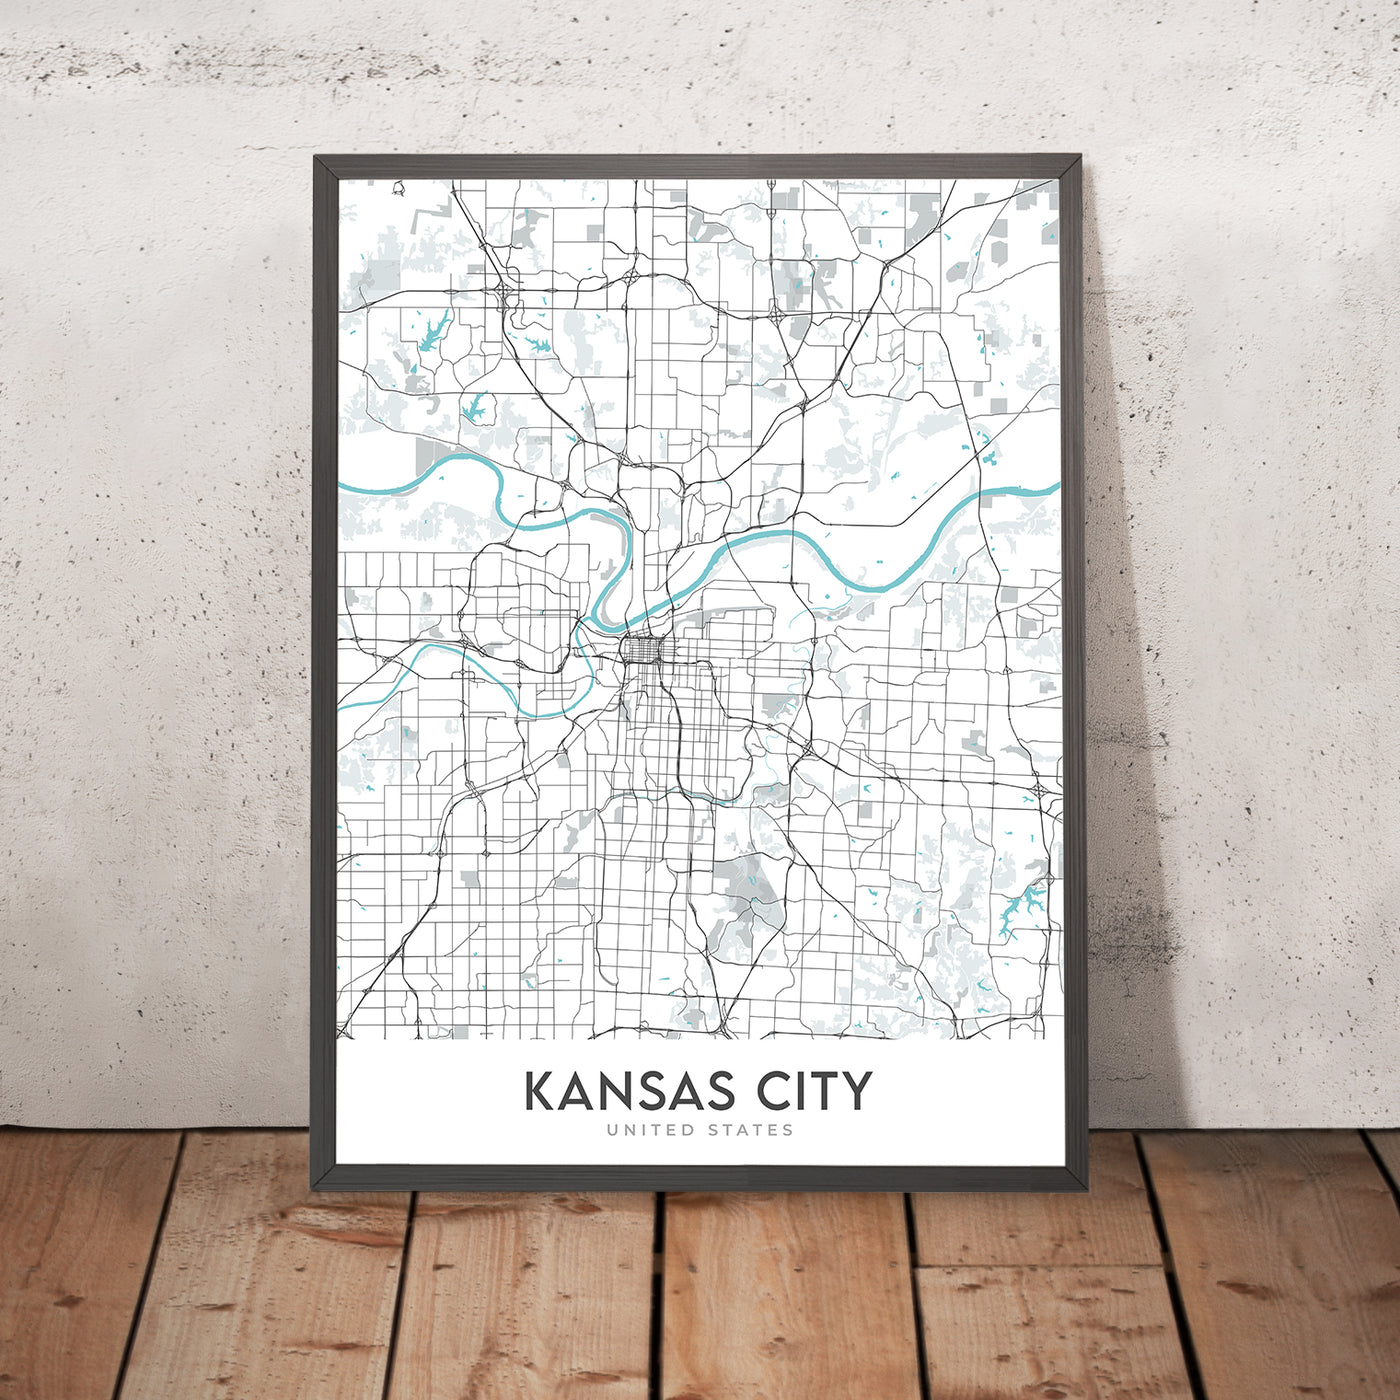 Modern City Map of Kansas City, MO: Downtown, Country Club Plaza, Kauffman Stadium, I-70, I-35